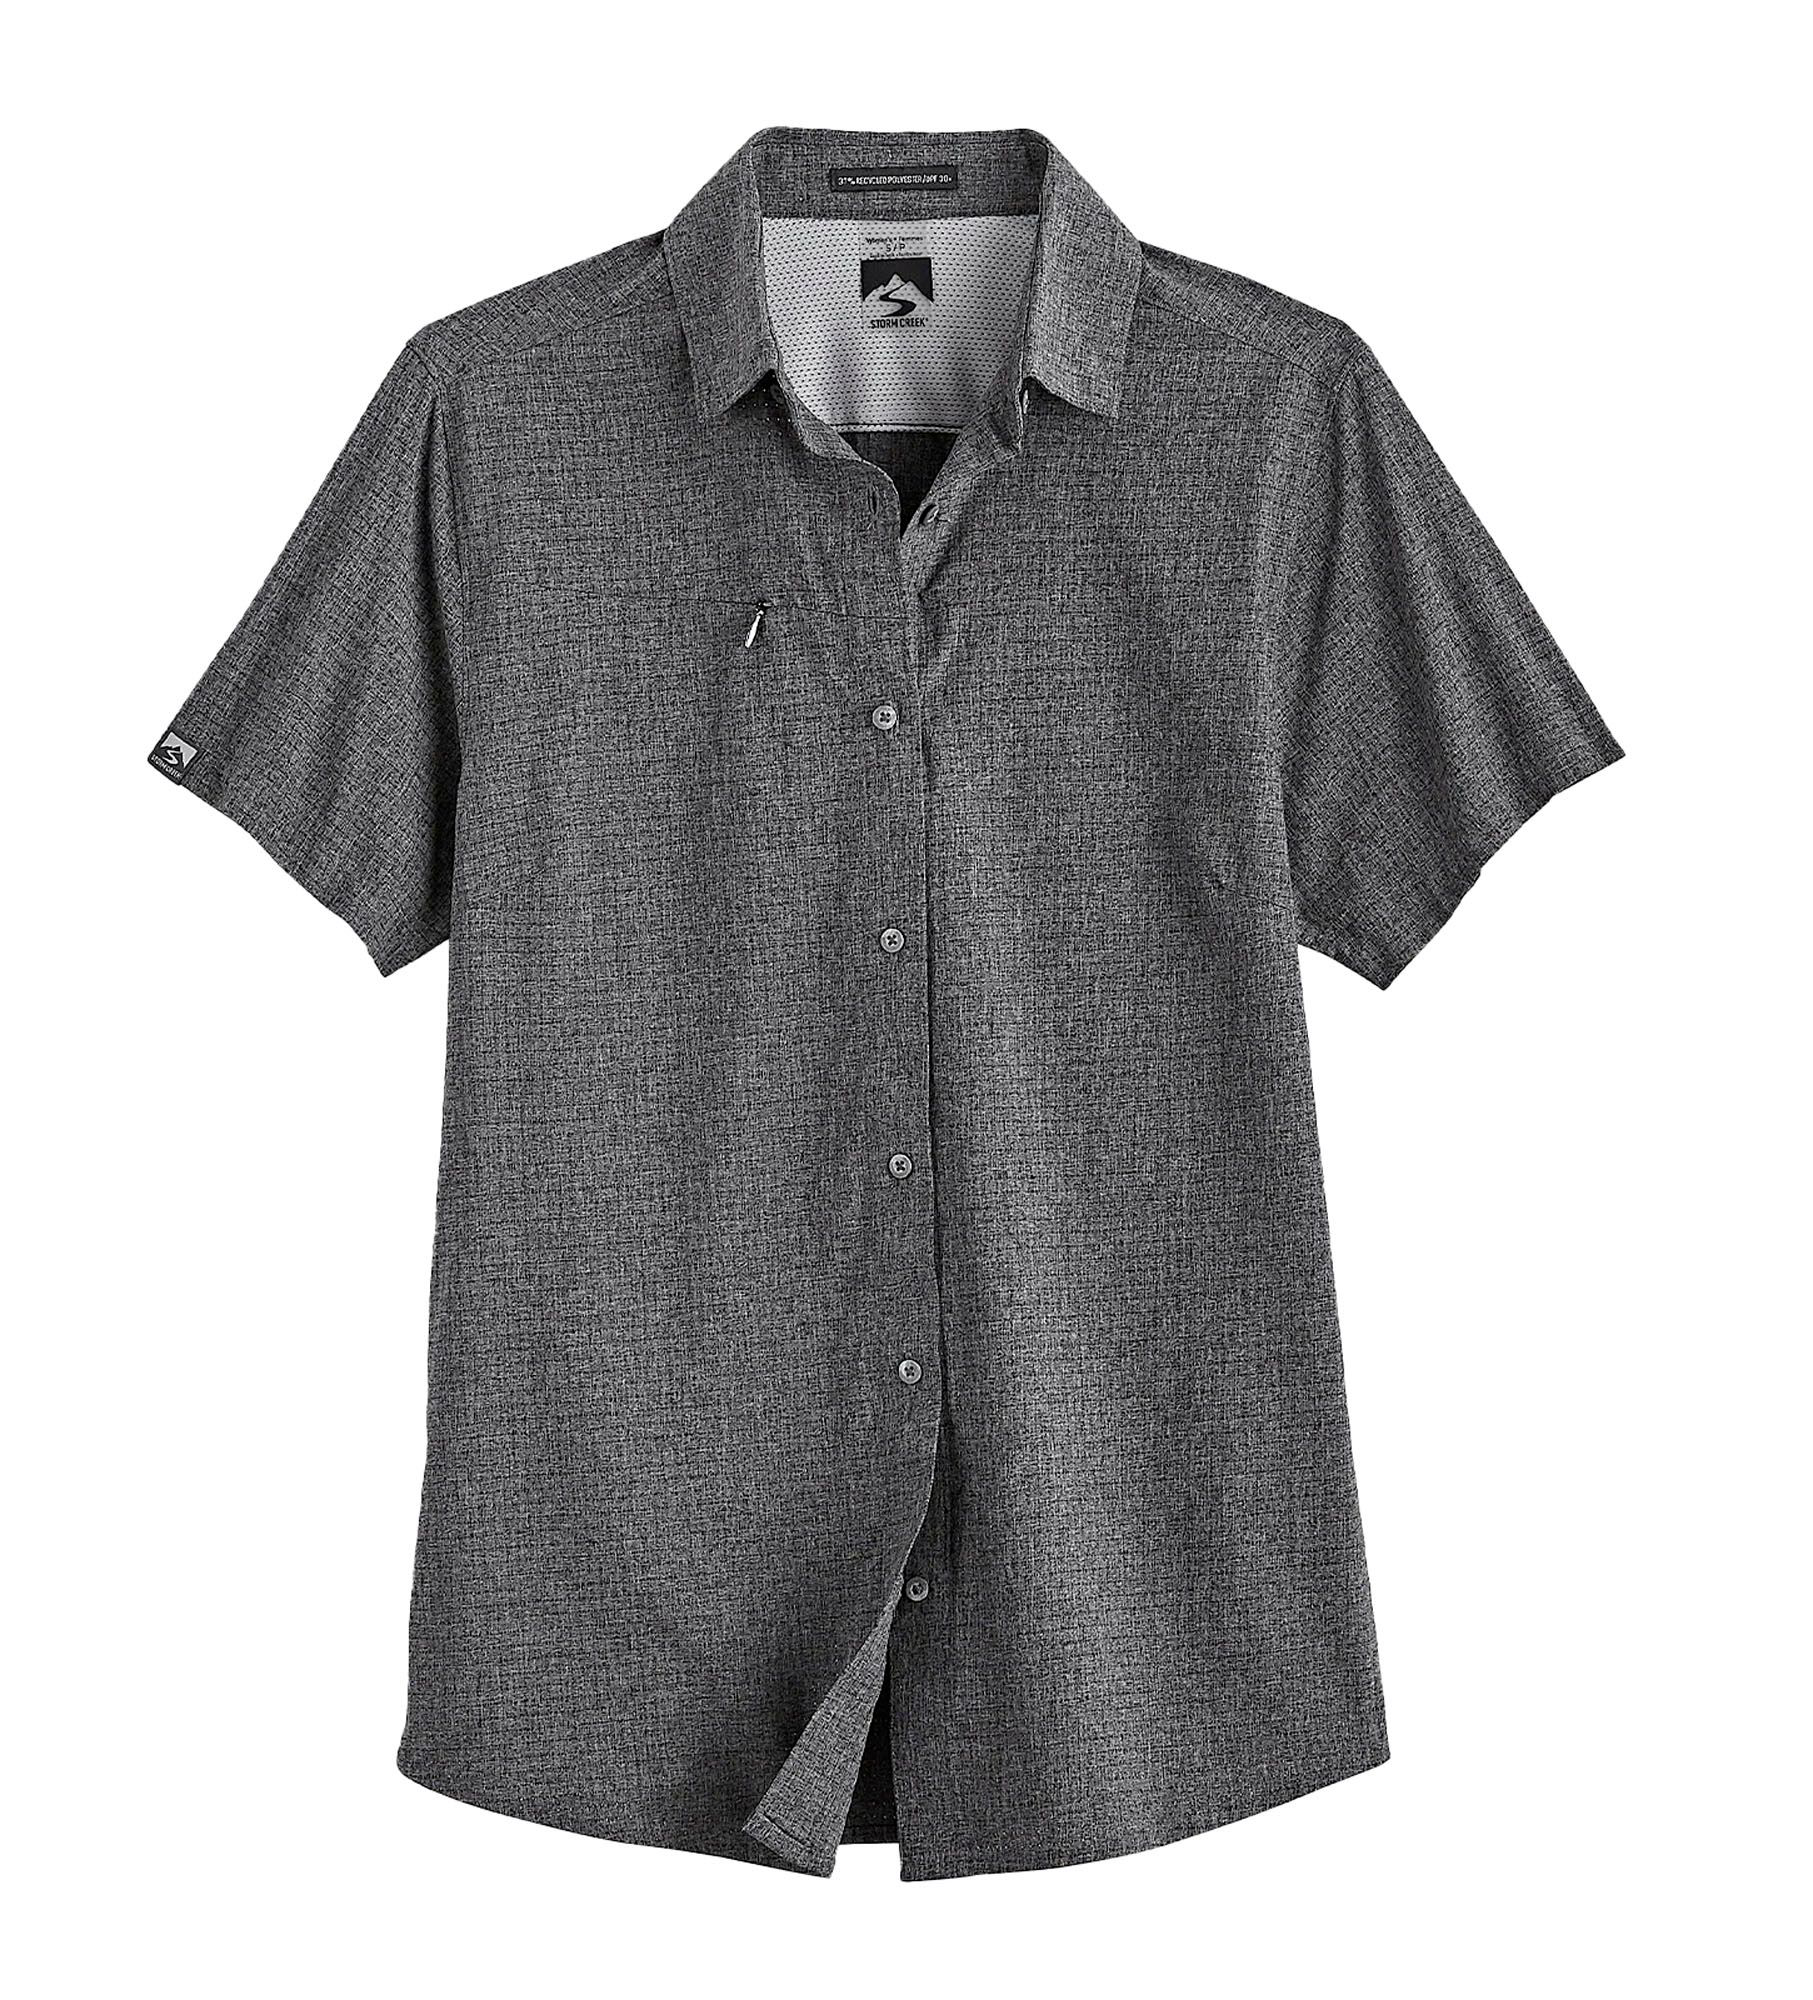 Storm Creek Naturalist Short-Sleeve Shirt for Ladies - Gray - L